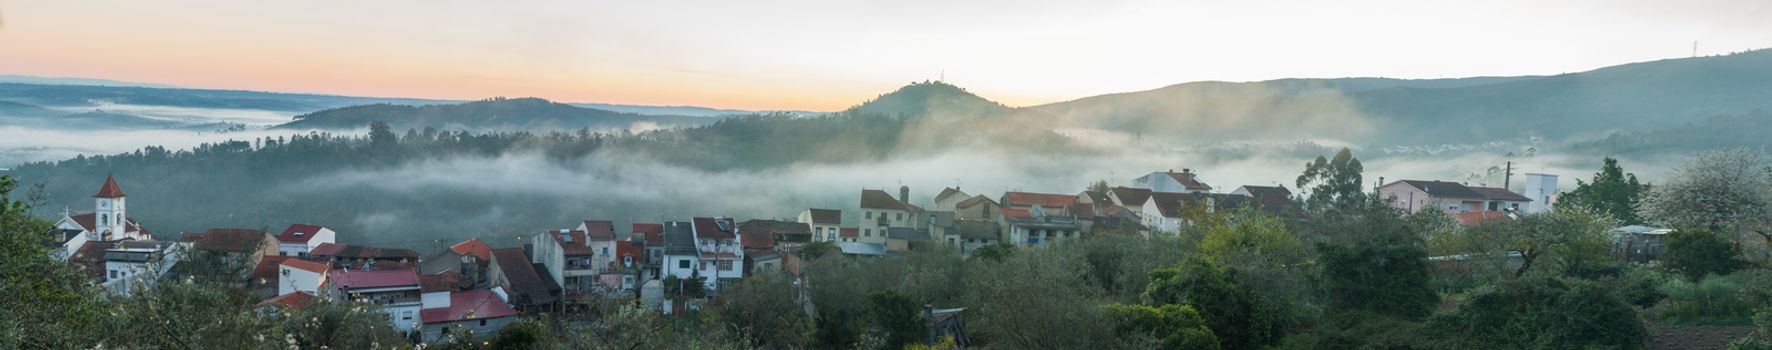 Panoramic view of the Village of Sao Jose near Arganil, Portugal.